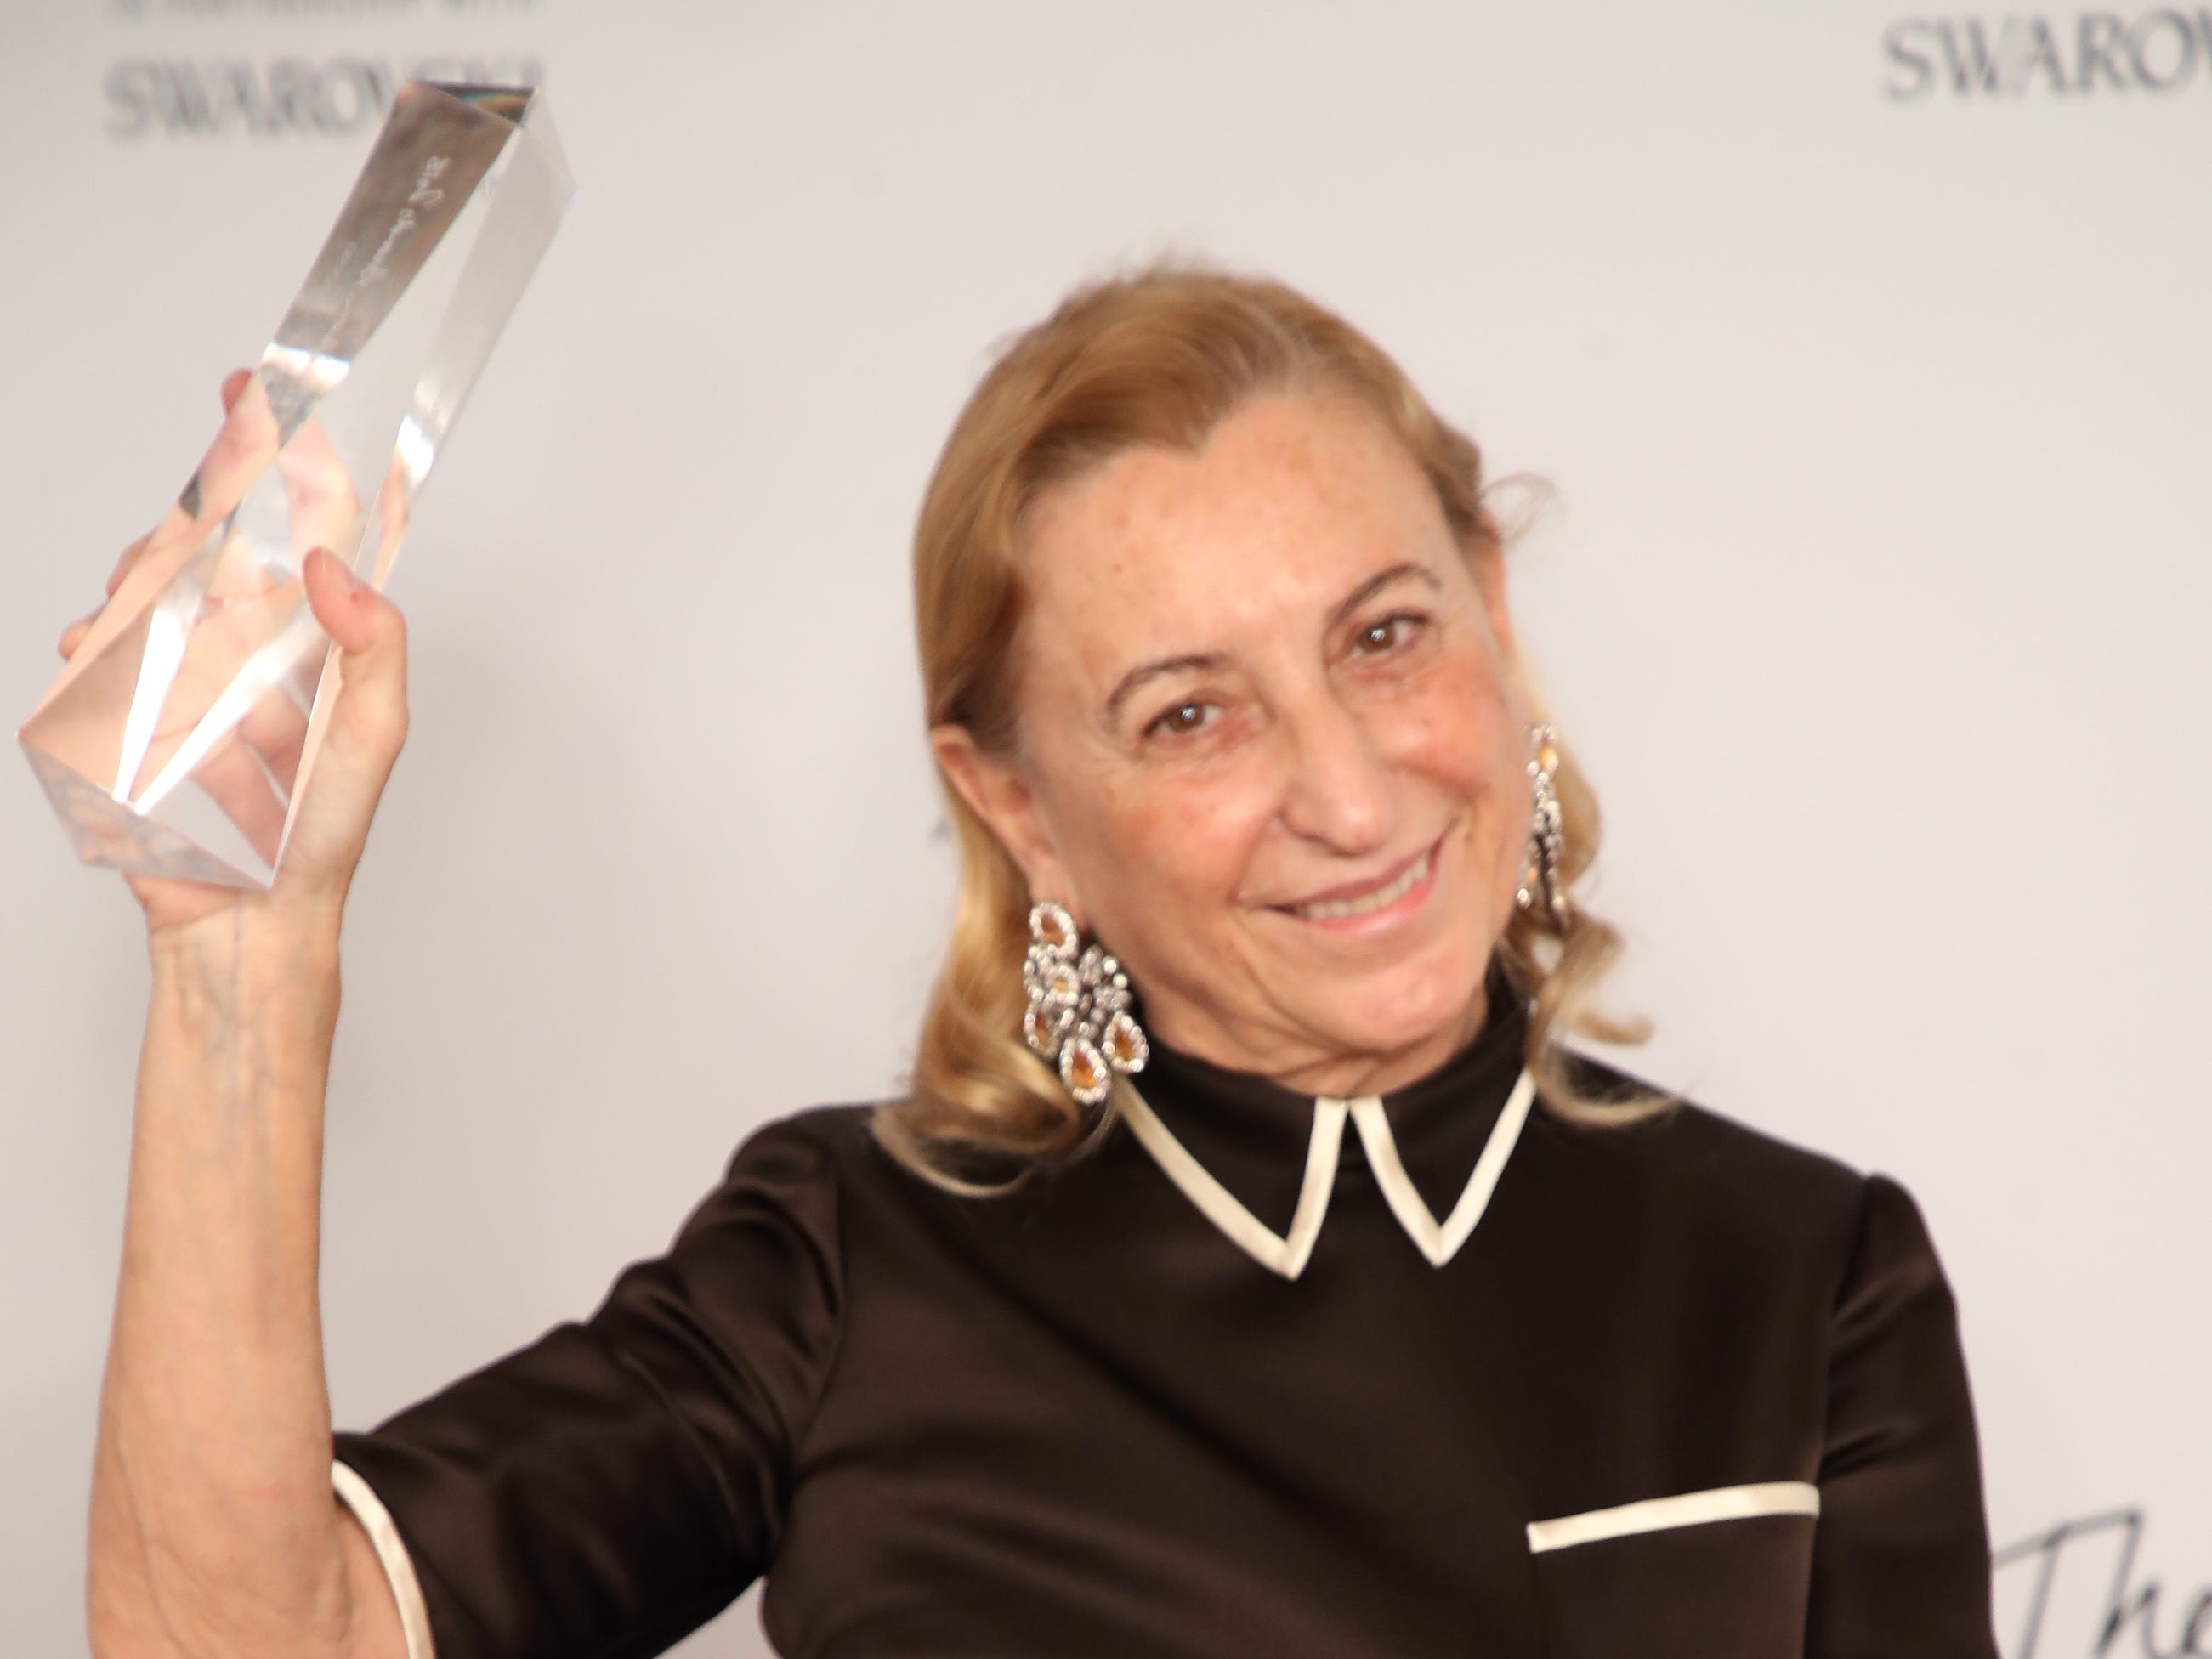 Miuccia Prada Outstanding Achievement Award 2018